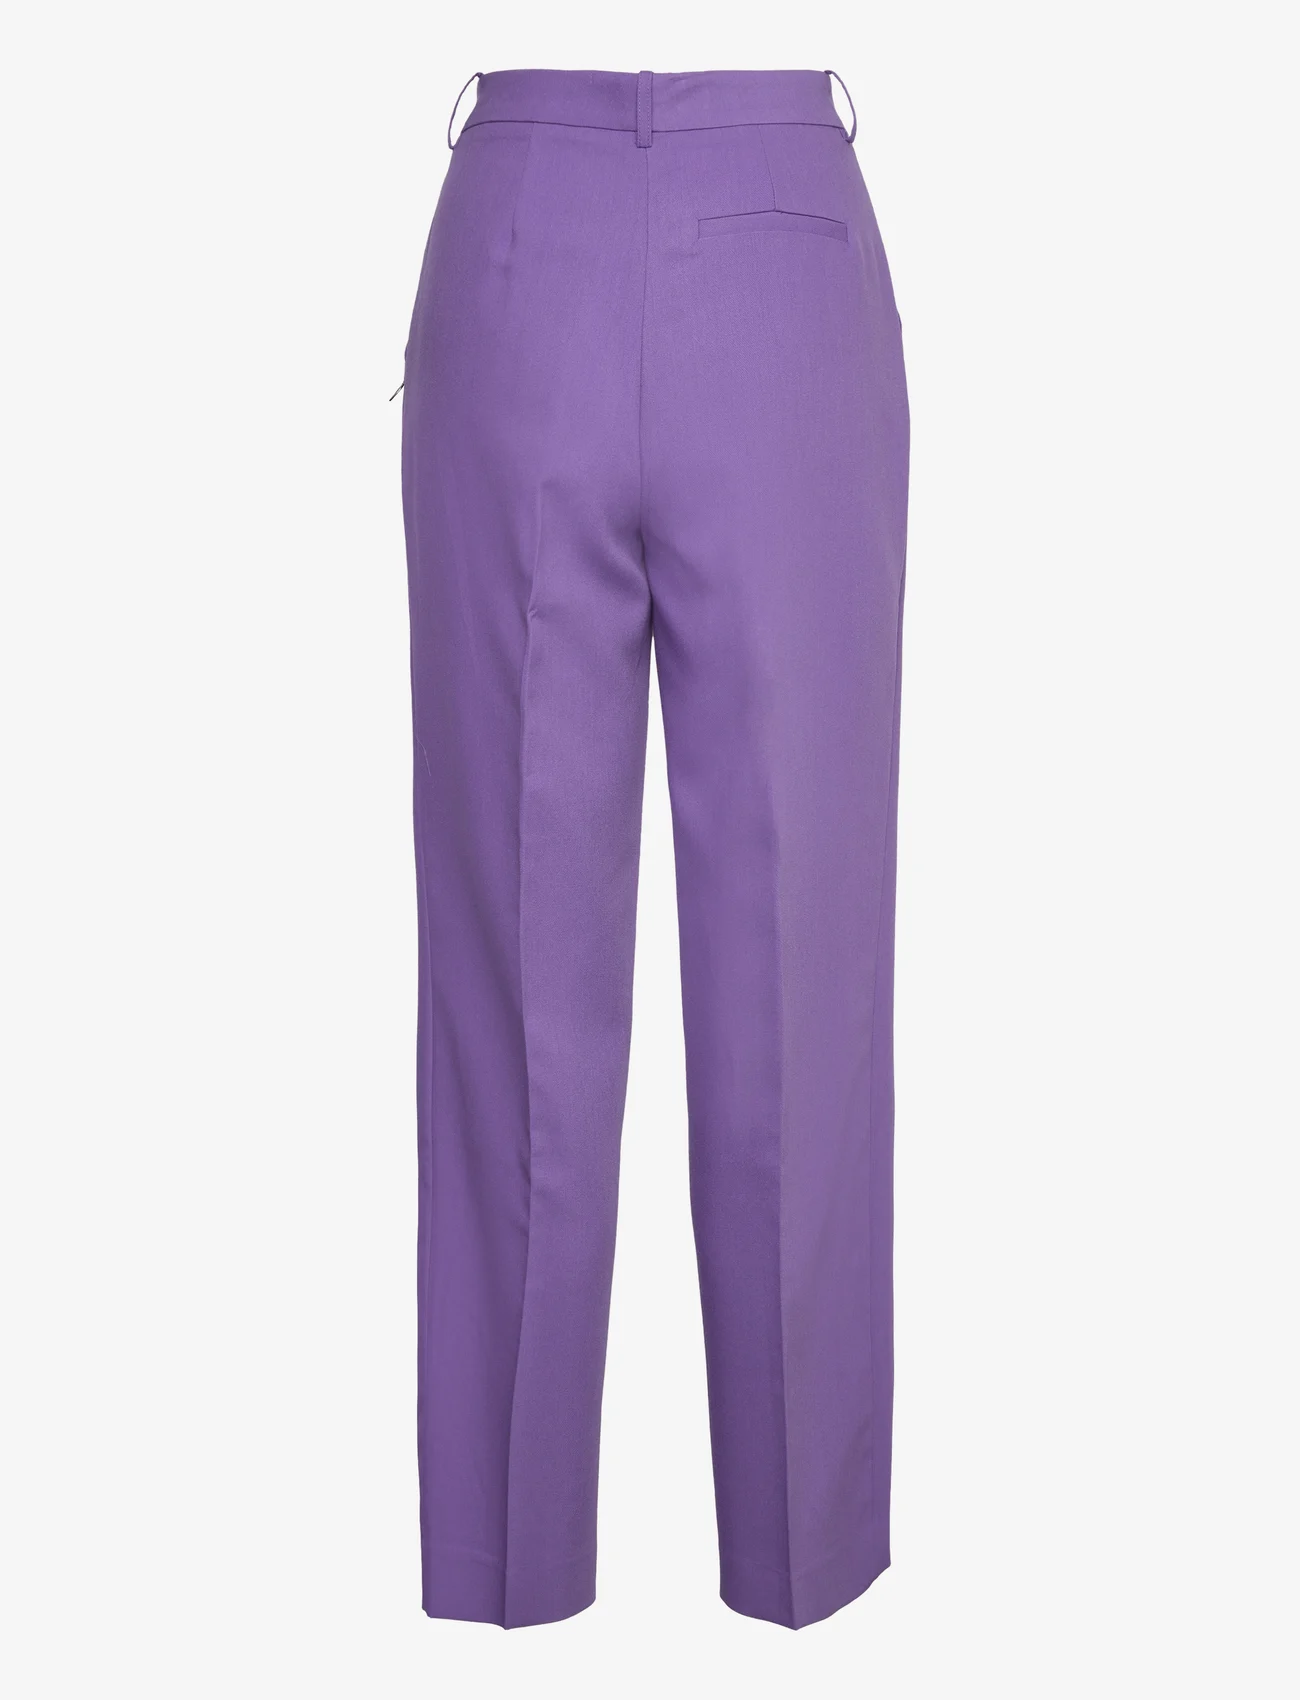 Coster Copenhagen - Pants with wide legs - Petra fit - leveälahkeiset housut - warm purple - 1